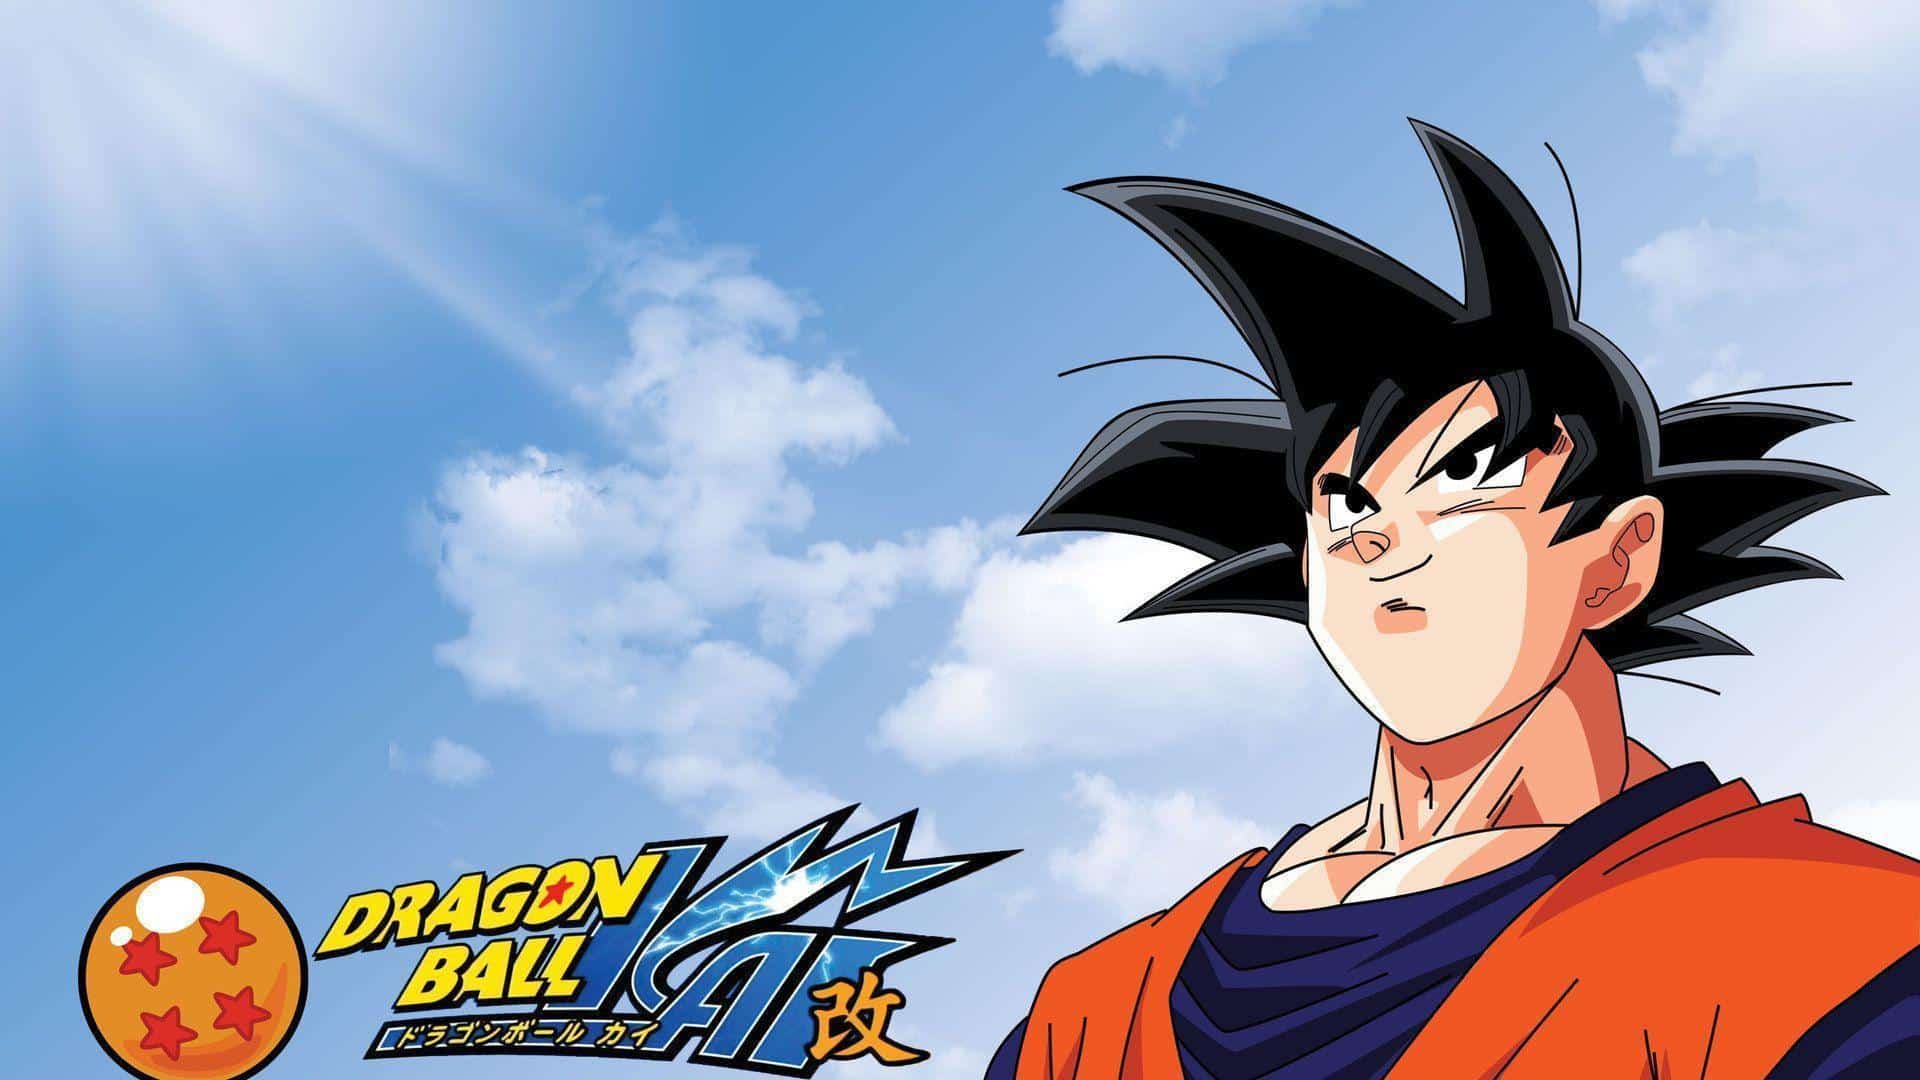 Dragon Ball Z Kai' chega no Warner Channel em junho - Olhar Digital